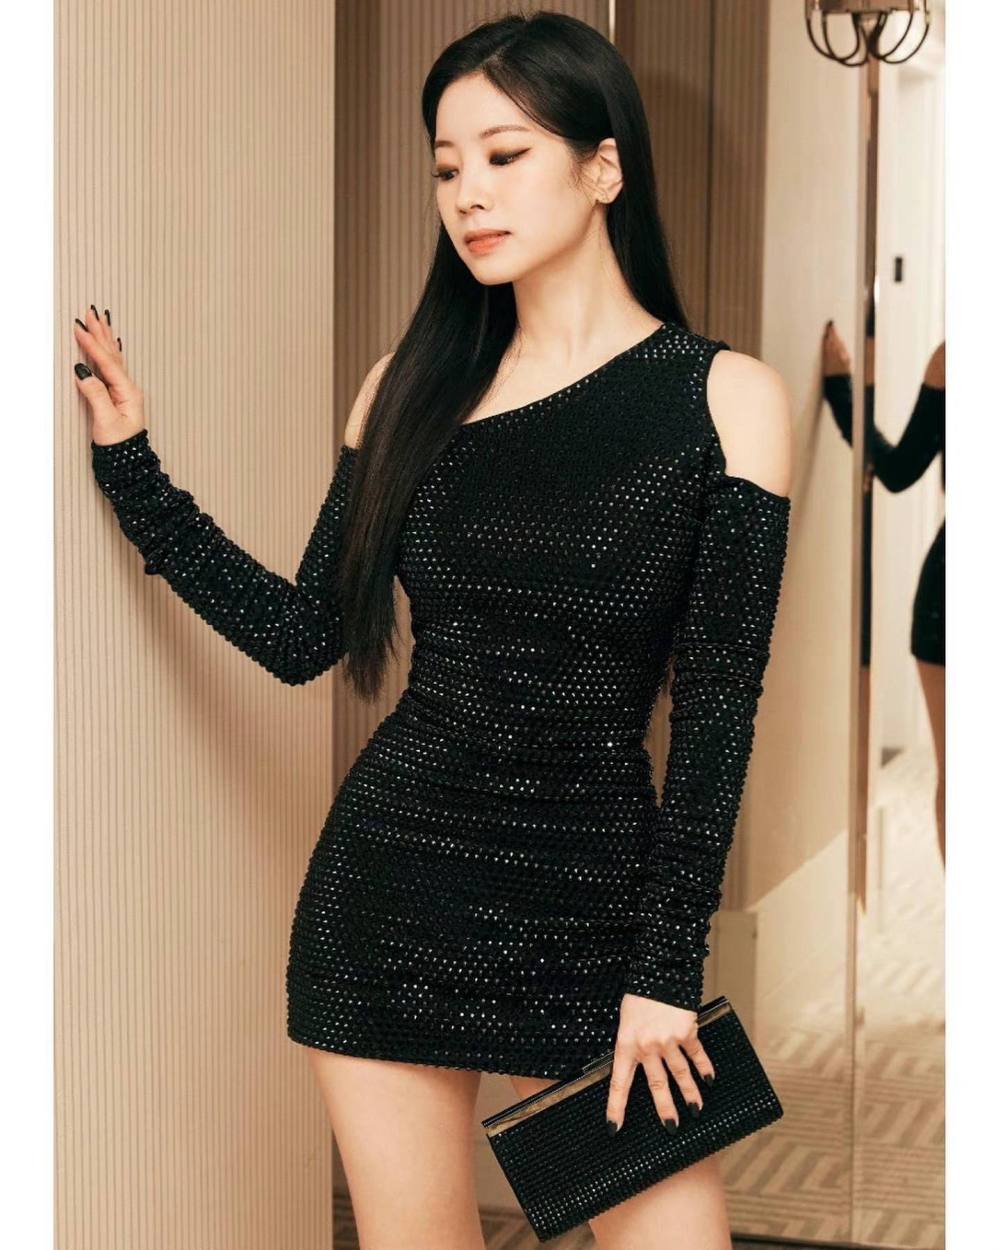 Da-Hyeon Kim Sexy and Hottest Photos , Latest Pics